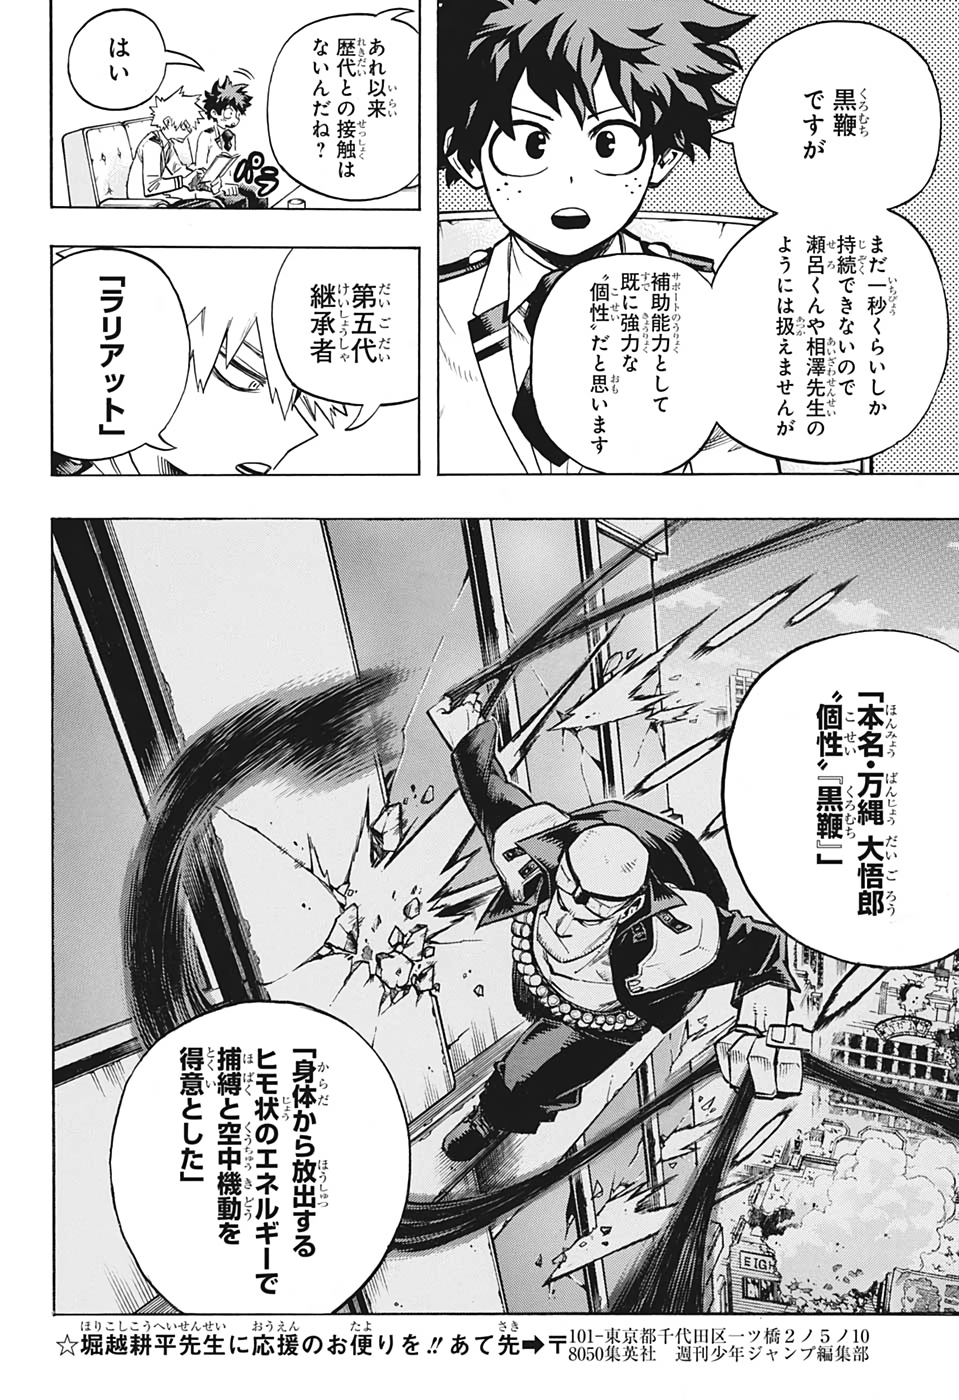 Boku no Hero Academia - Chapter 257 - Page 2